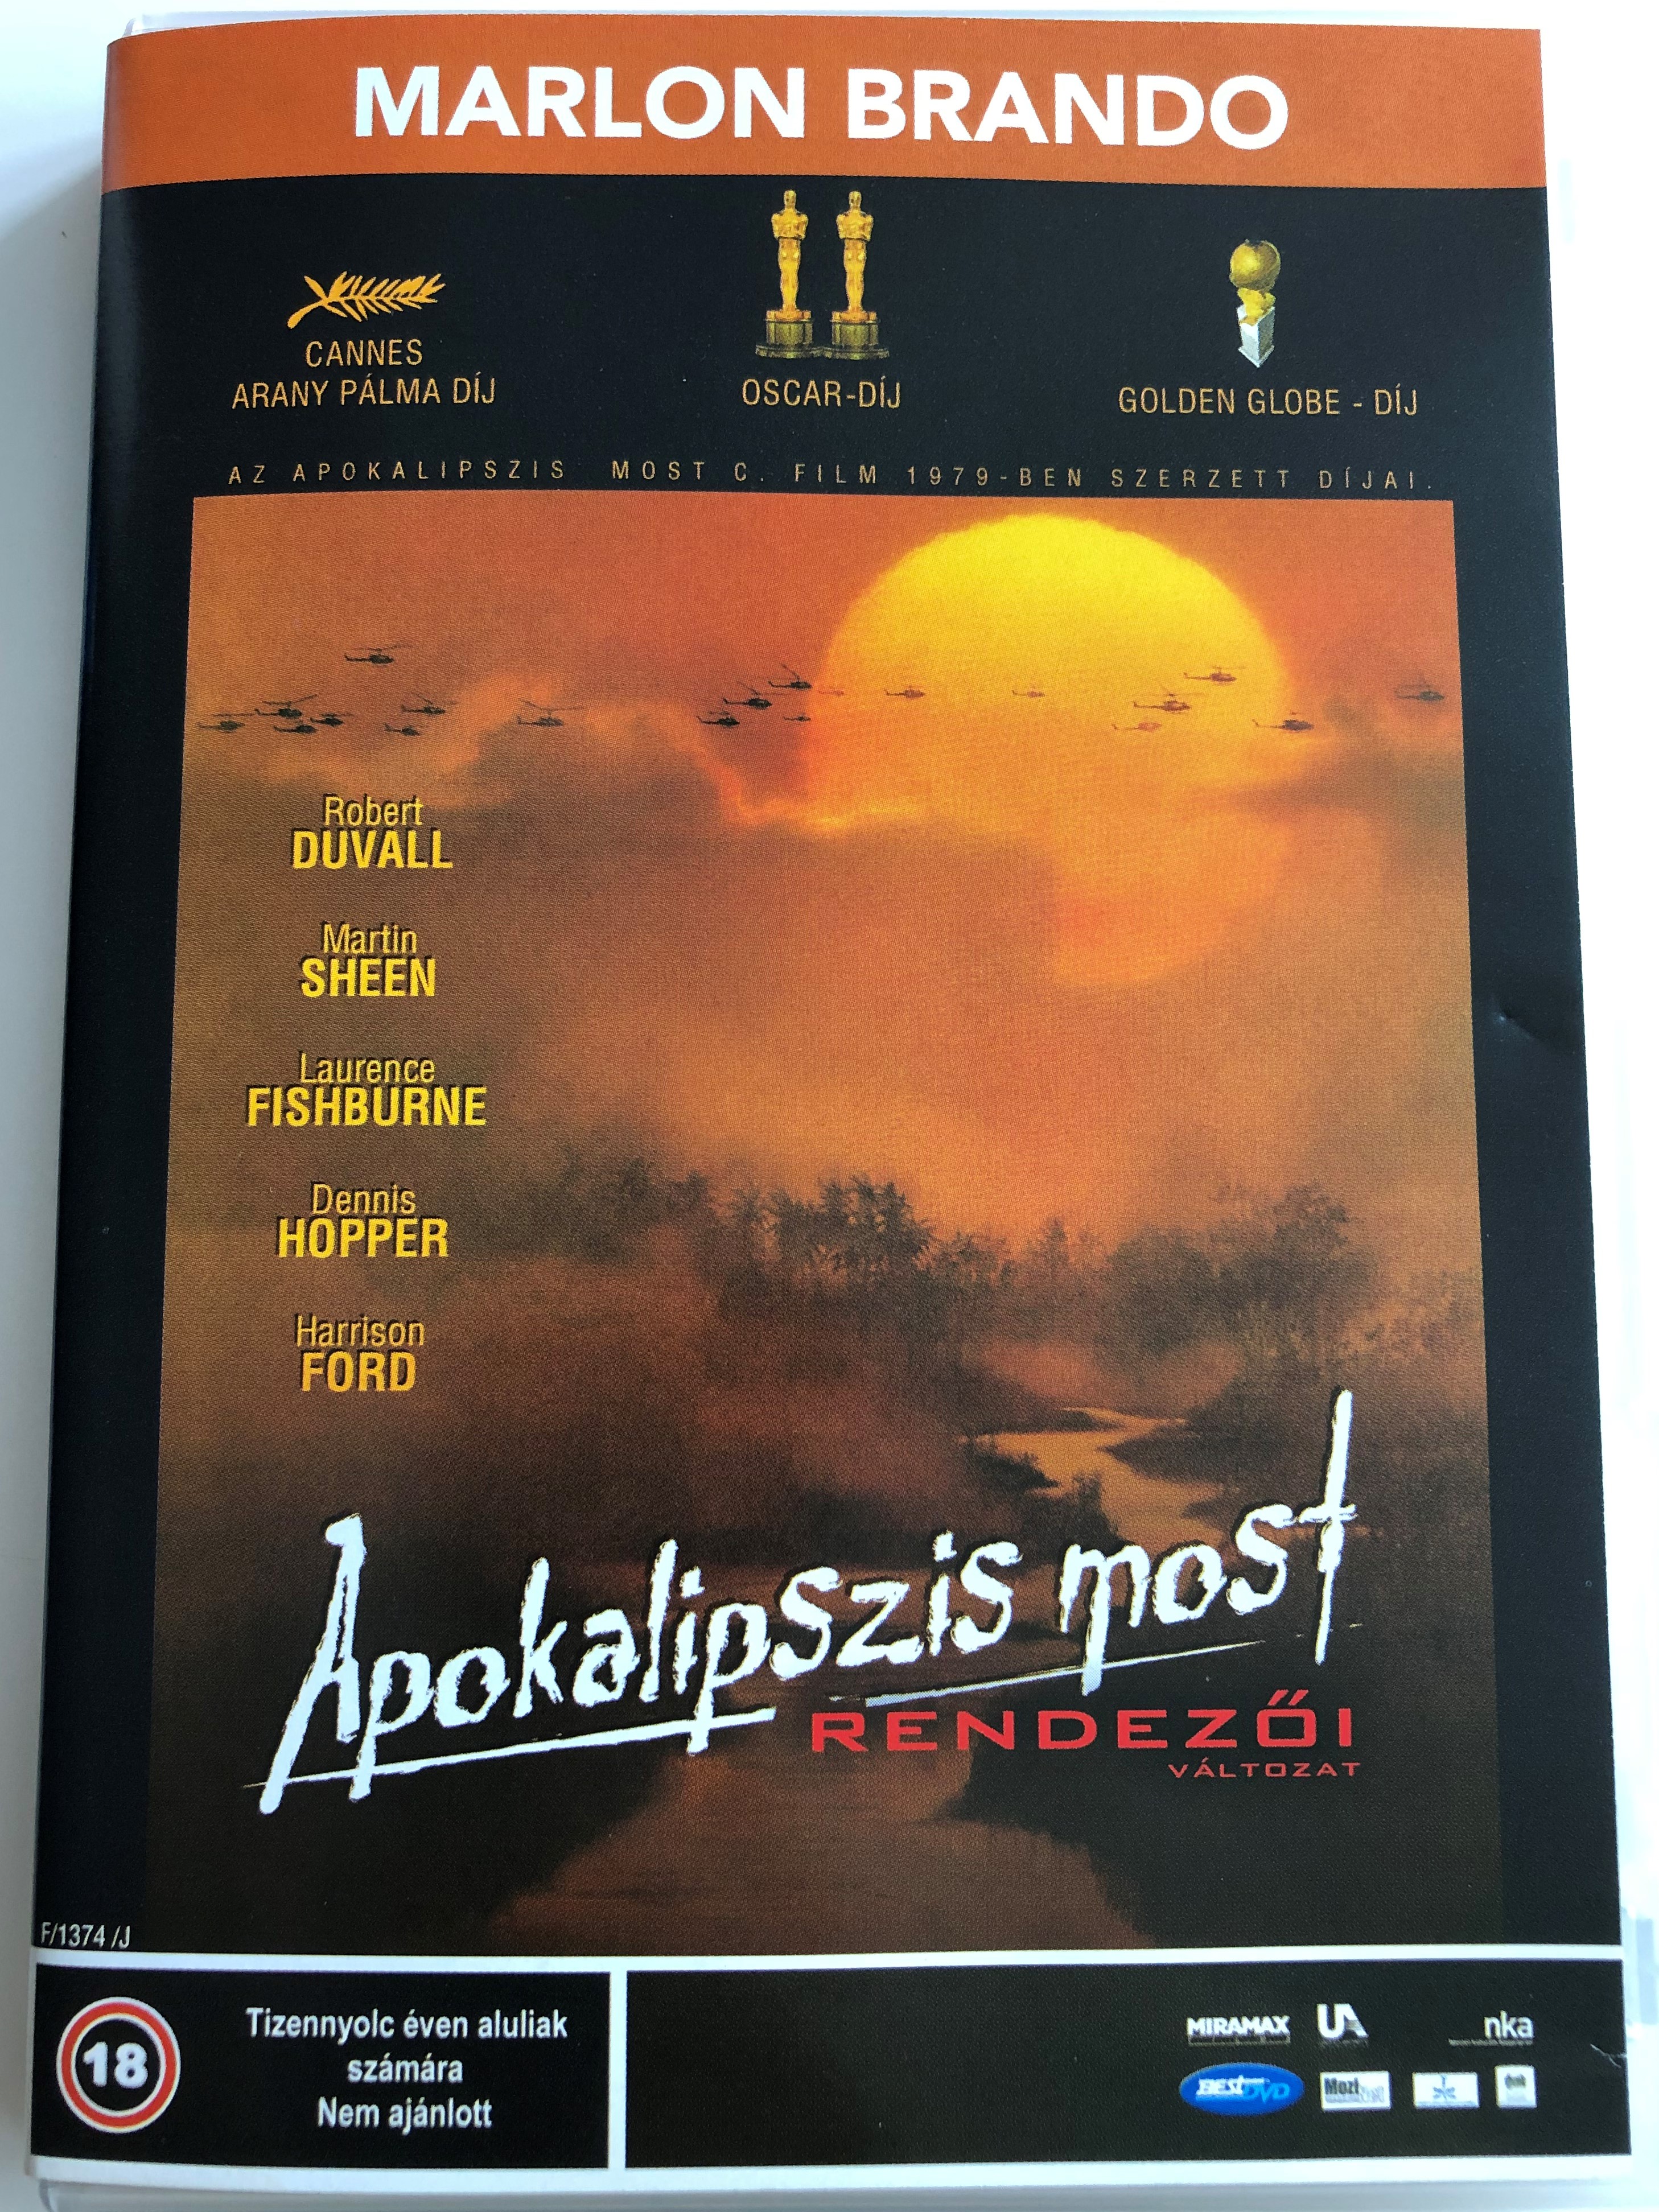 apocalypse-now-redux-dvd-2001-apokalipszis-most-rendez-i-v-ltozat-directed-by-francis-ford-coppola-starring-marlon-brando-robert-duvall-martin-sheen-laurence-fishburne-dennis-hopper-harrison-ford-1-.jpg